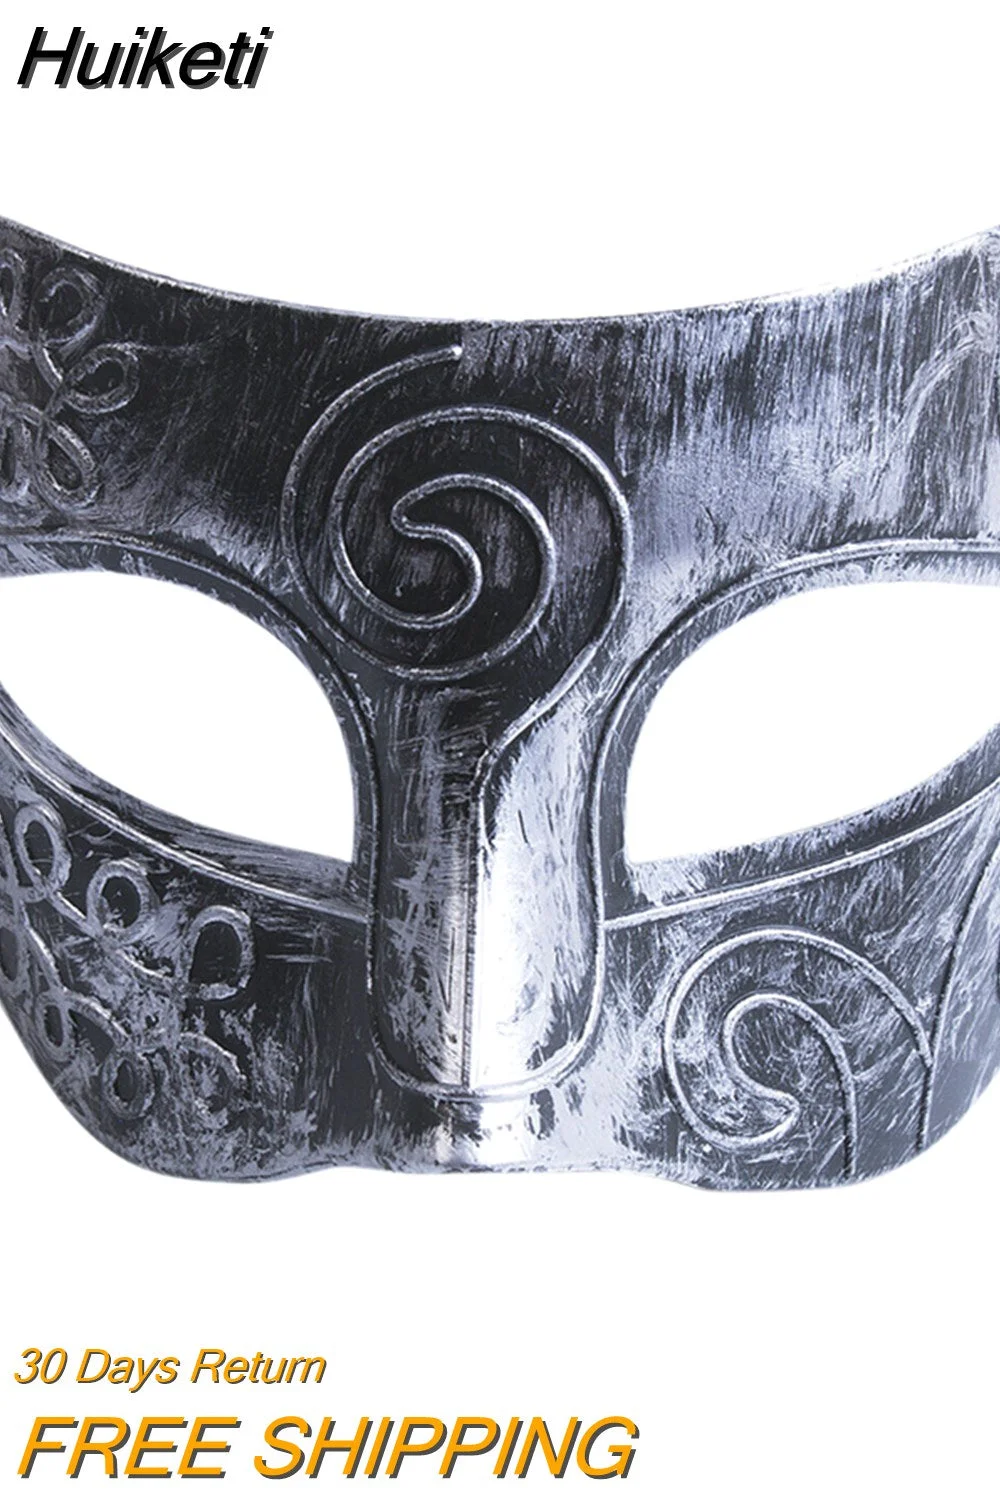 Huiketi Party Men Warrior Masquerade Mask Halloween Costume Party Mask Vintage Greek Roman Mask Burnished Antique Silver Gold